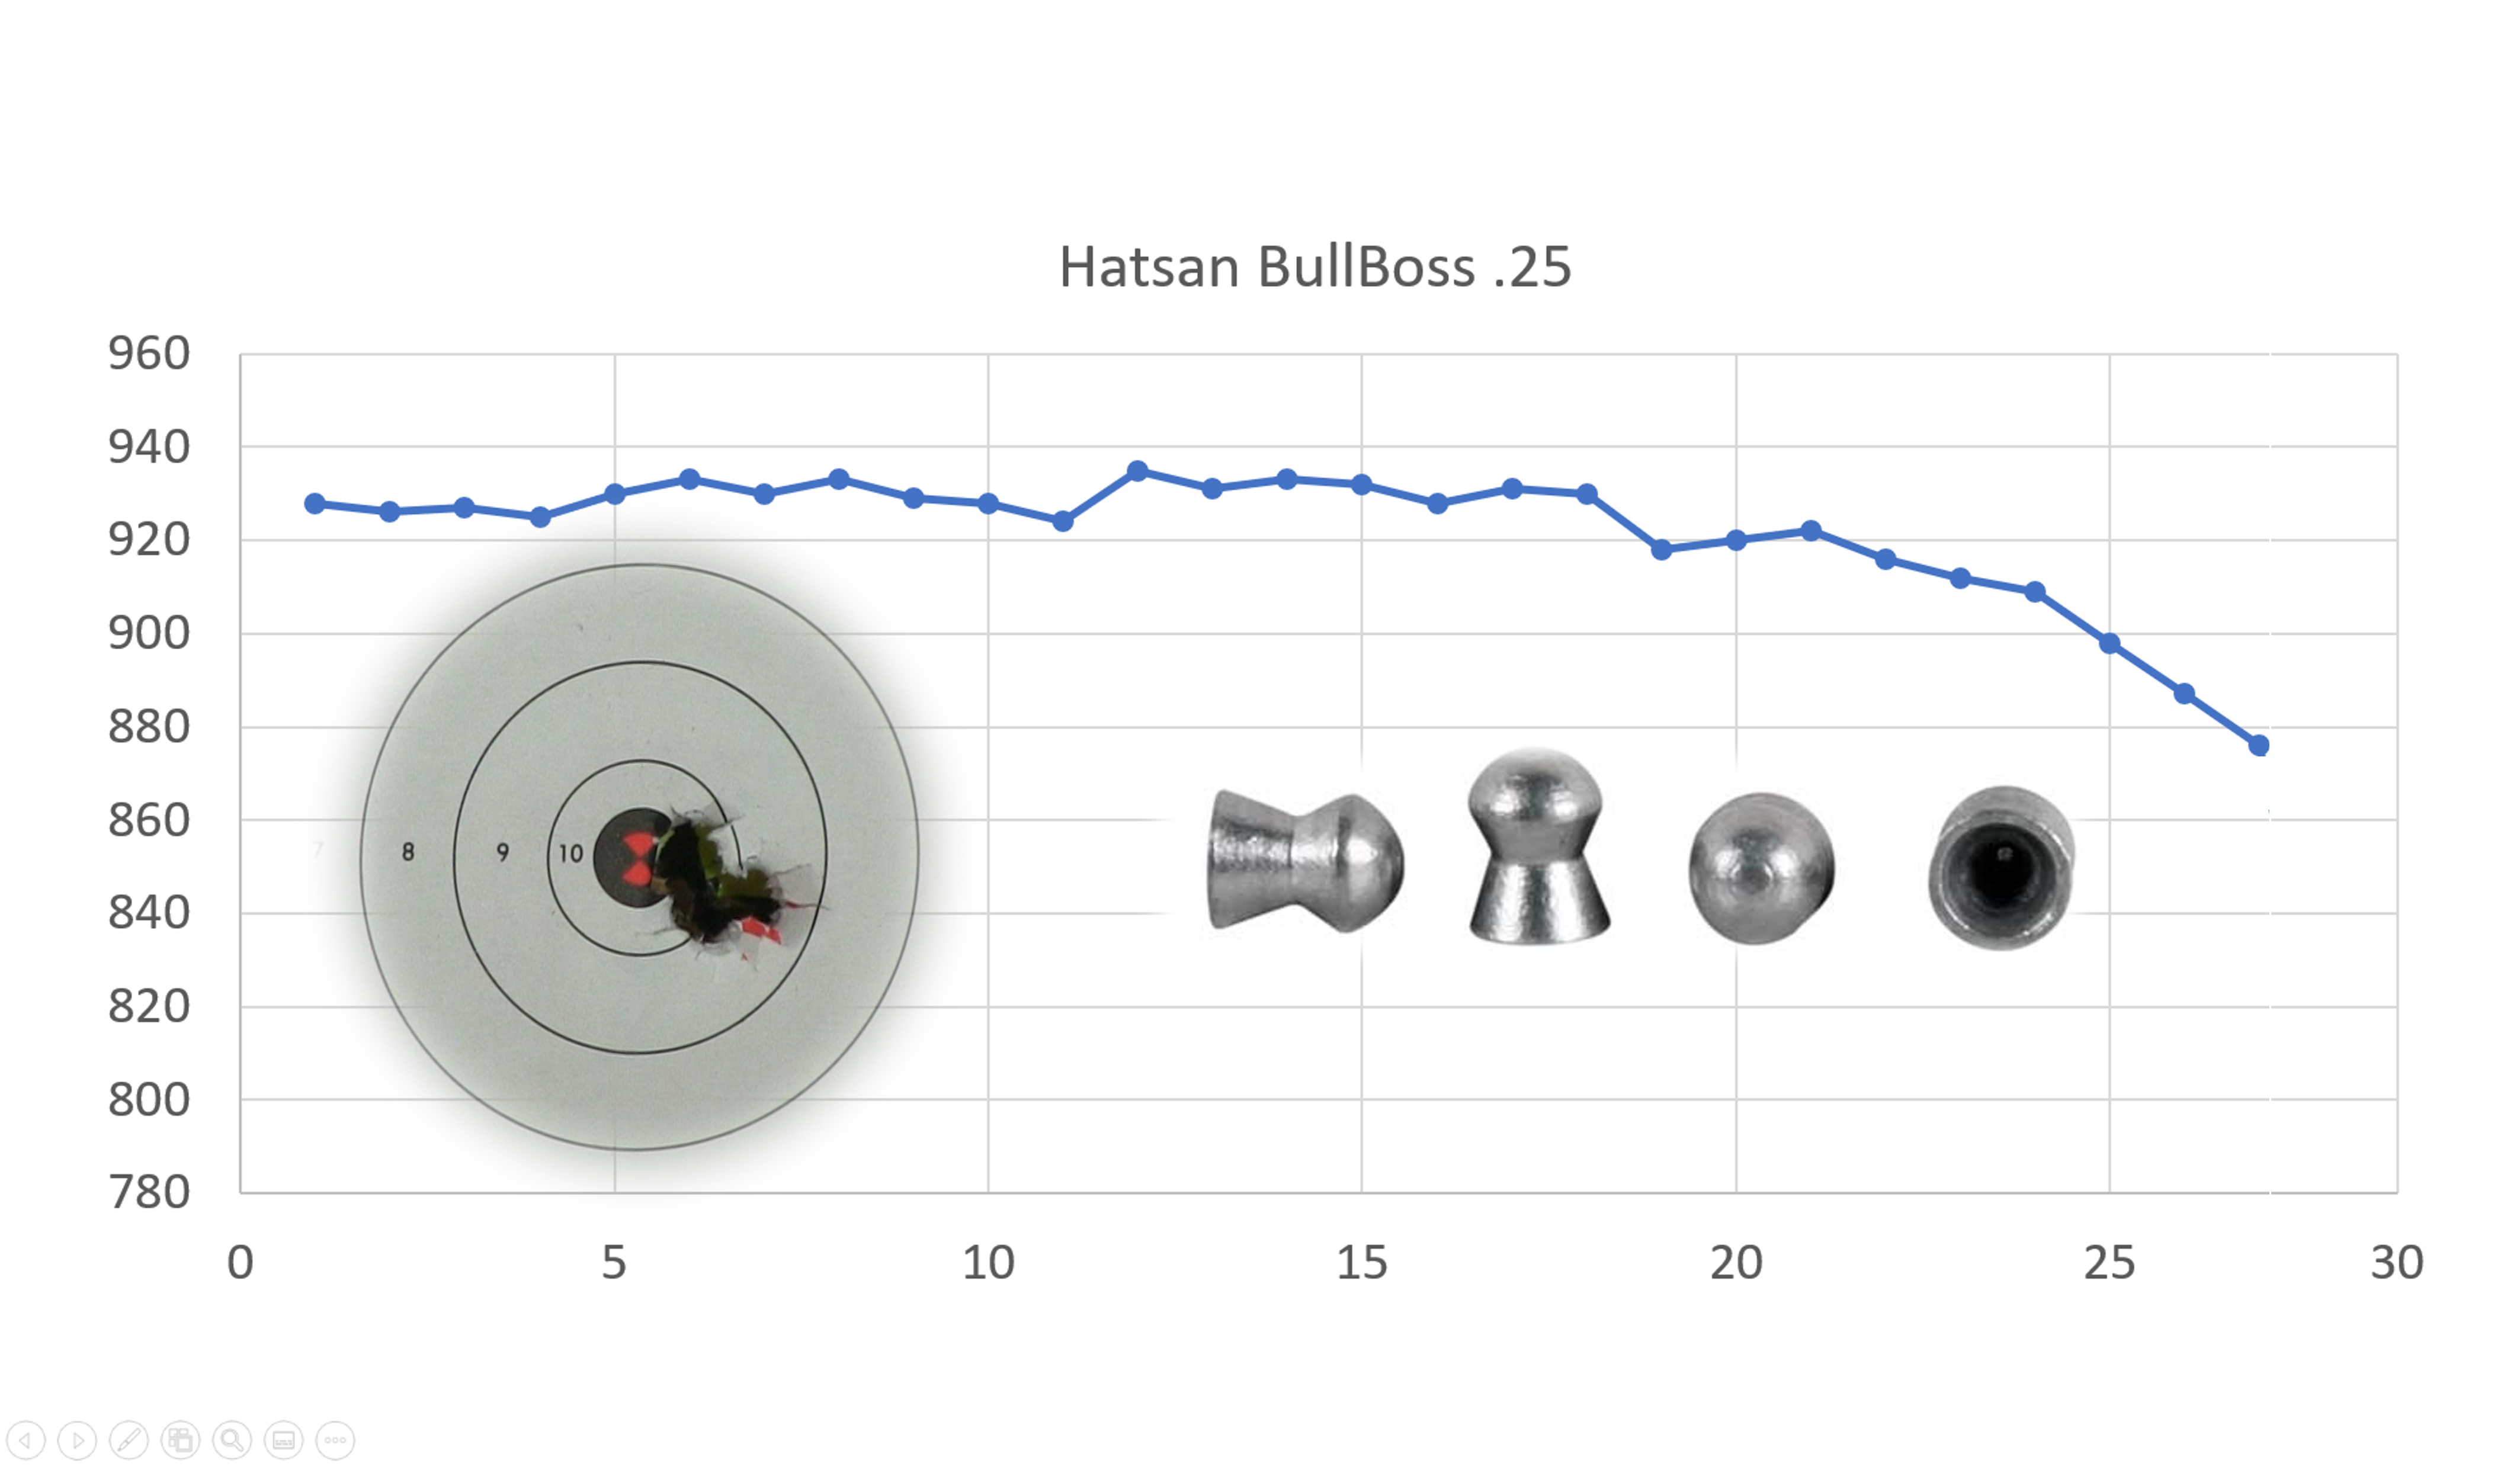 Hatsan BullBoss accuracy